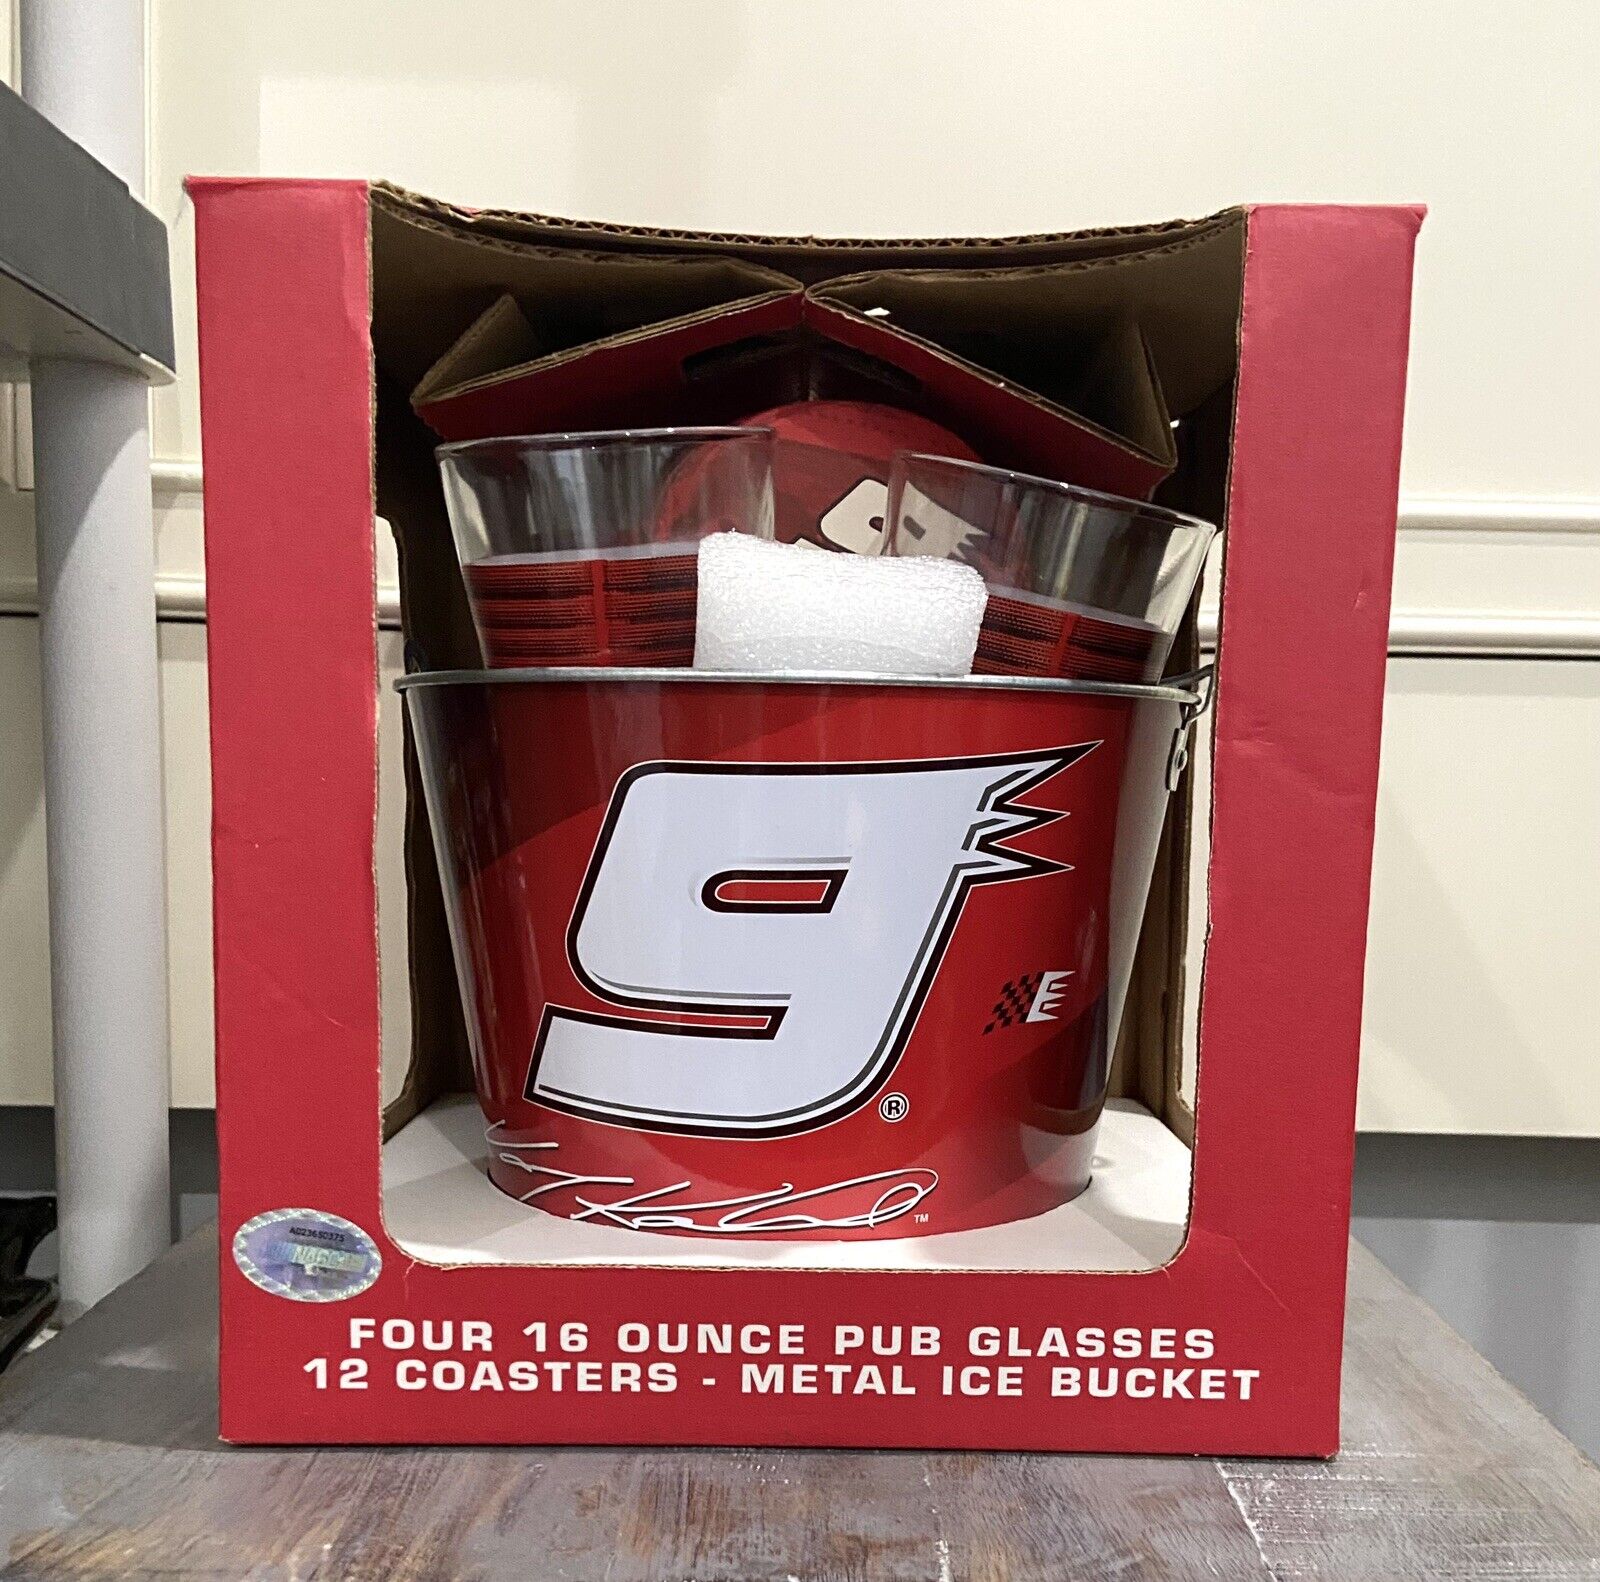 NASCAR Kasey Kahne #9 Bar Drinking Glasses & Ice Bucket Coasters Racing Set NIB